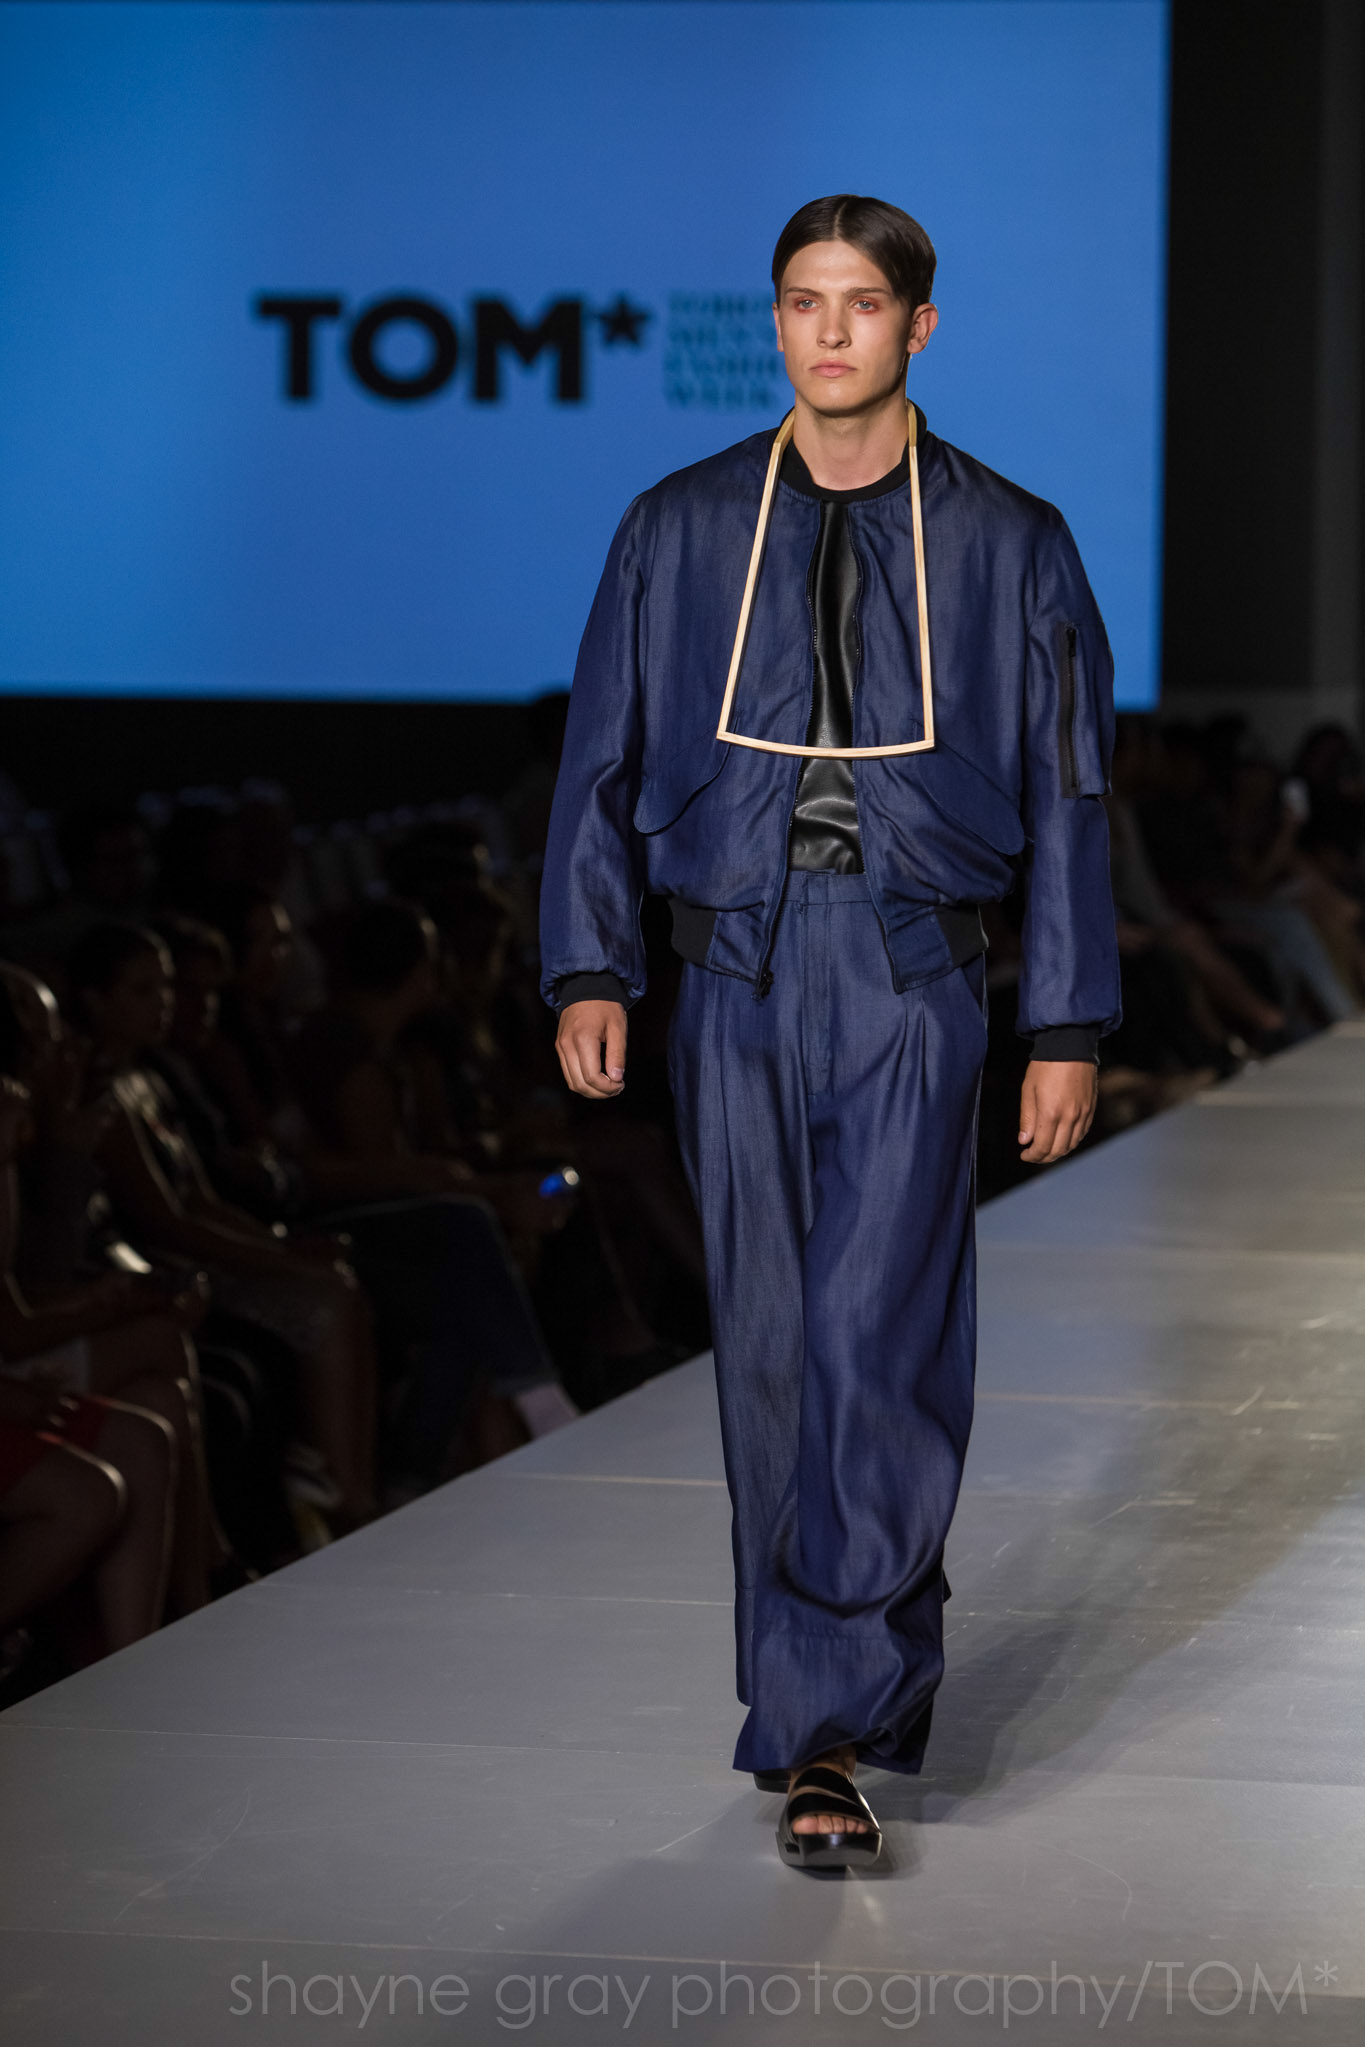 Shayne-Gray-Toronto-men's-fashion_week-TOM-wrkdept-8700.jpg